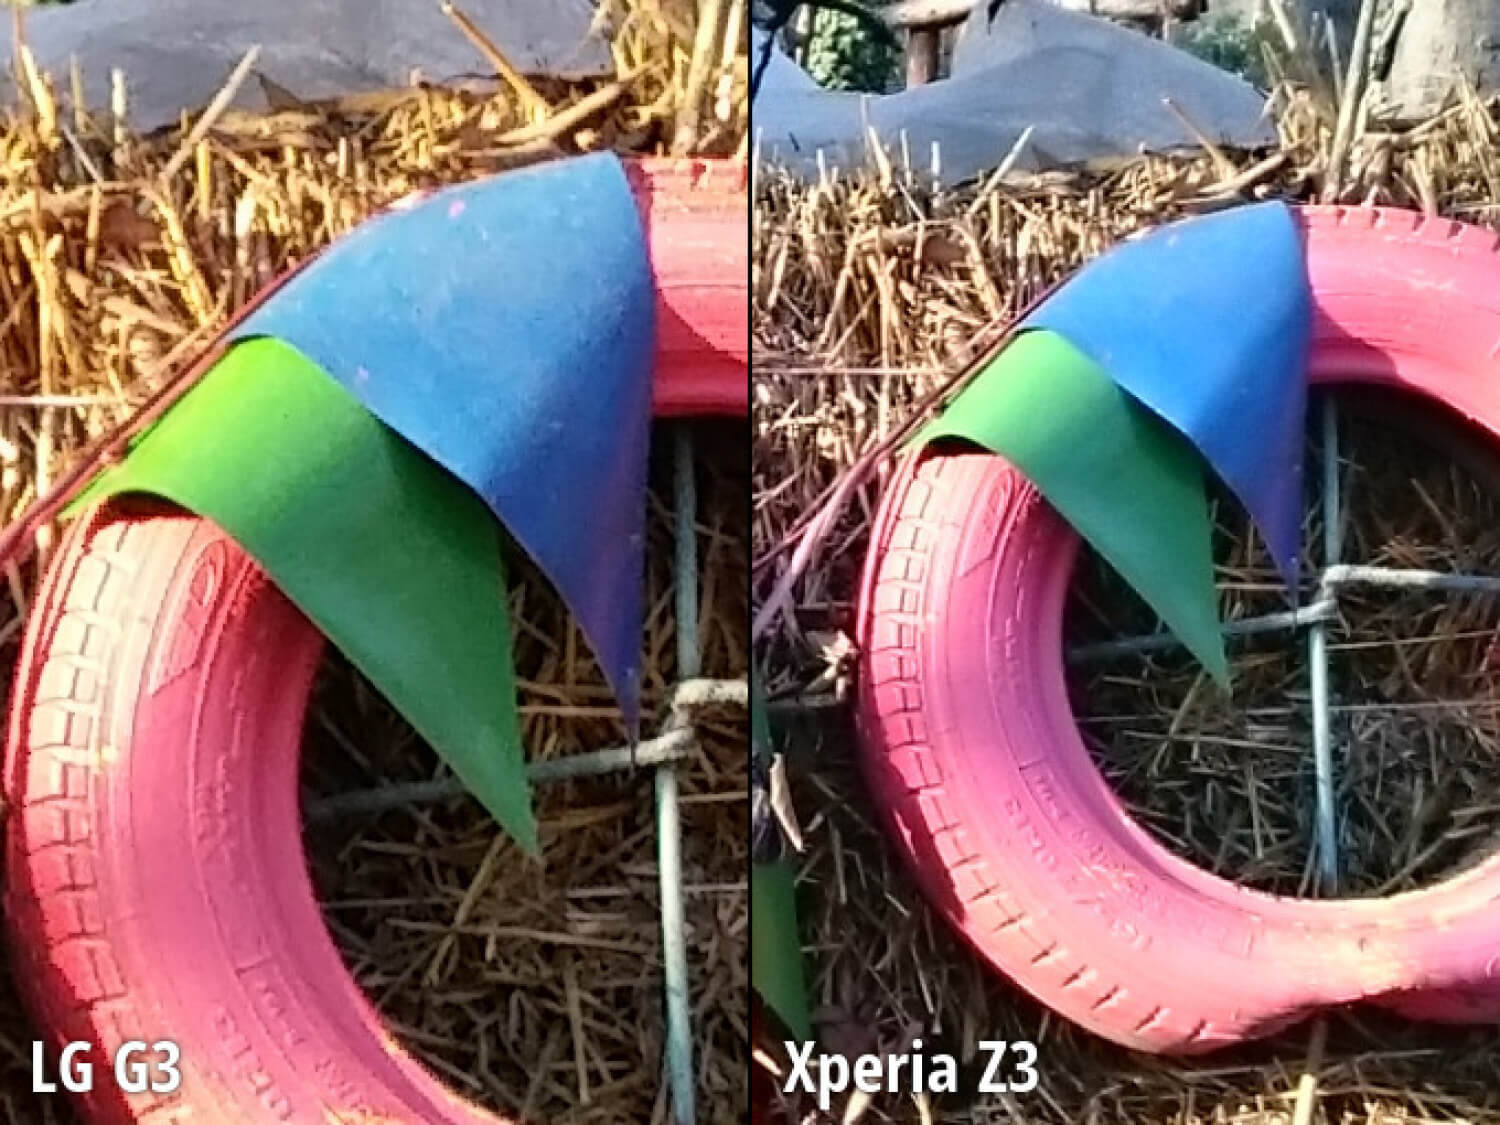 LG-G3-vs-Xperia-Z3-photos-crop-zoom-26